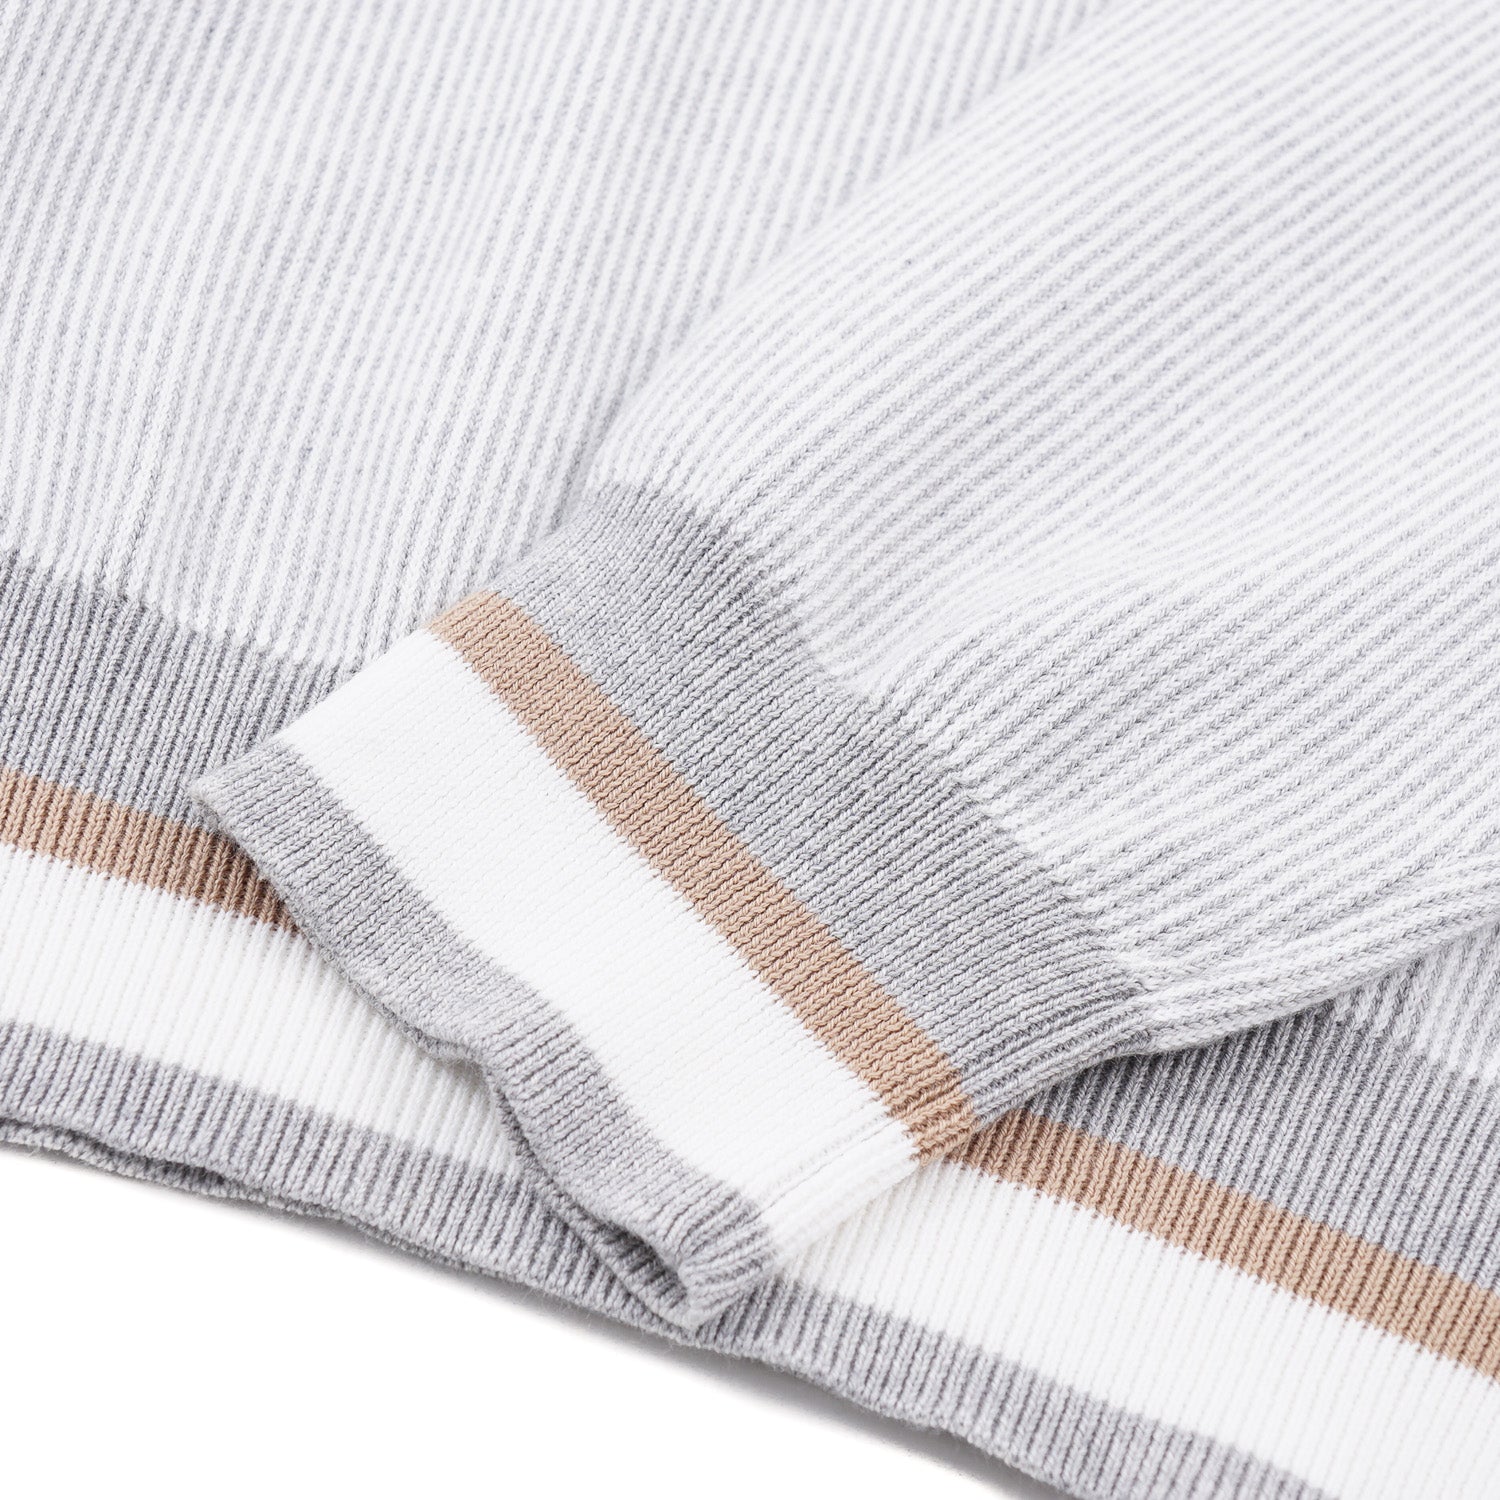 Peserico Soft Knit Cotton Sweater - Top Shelf Apparel